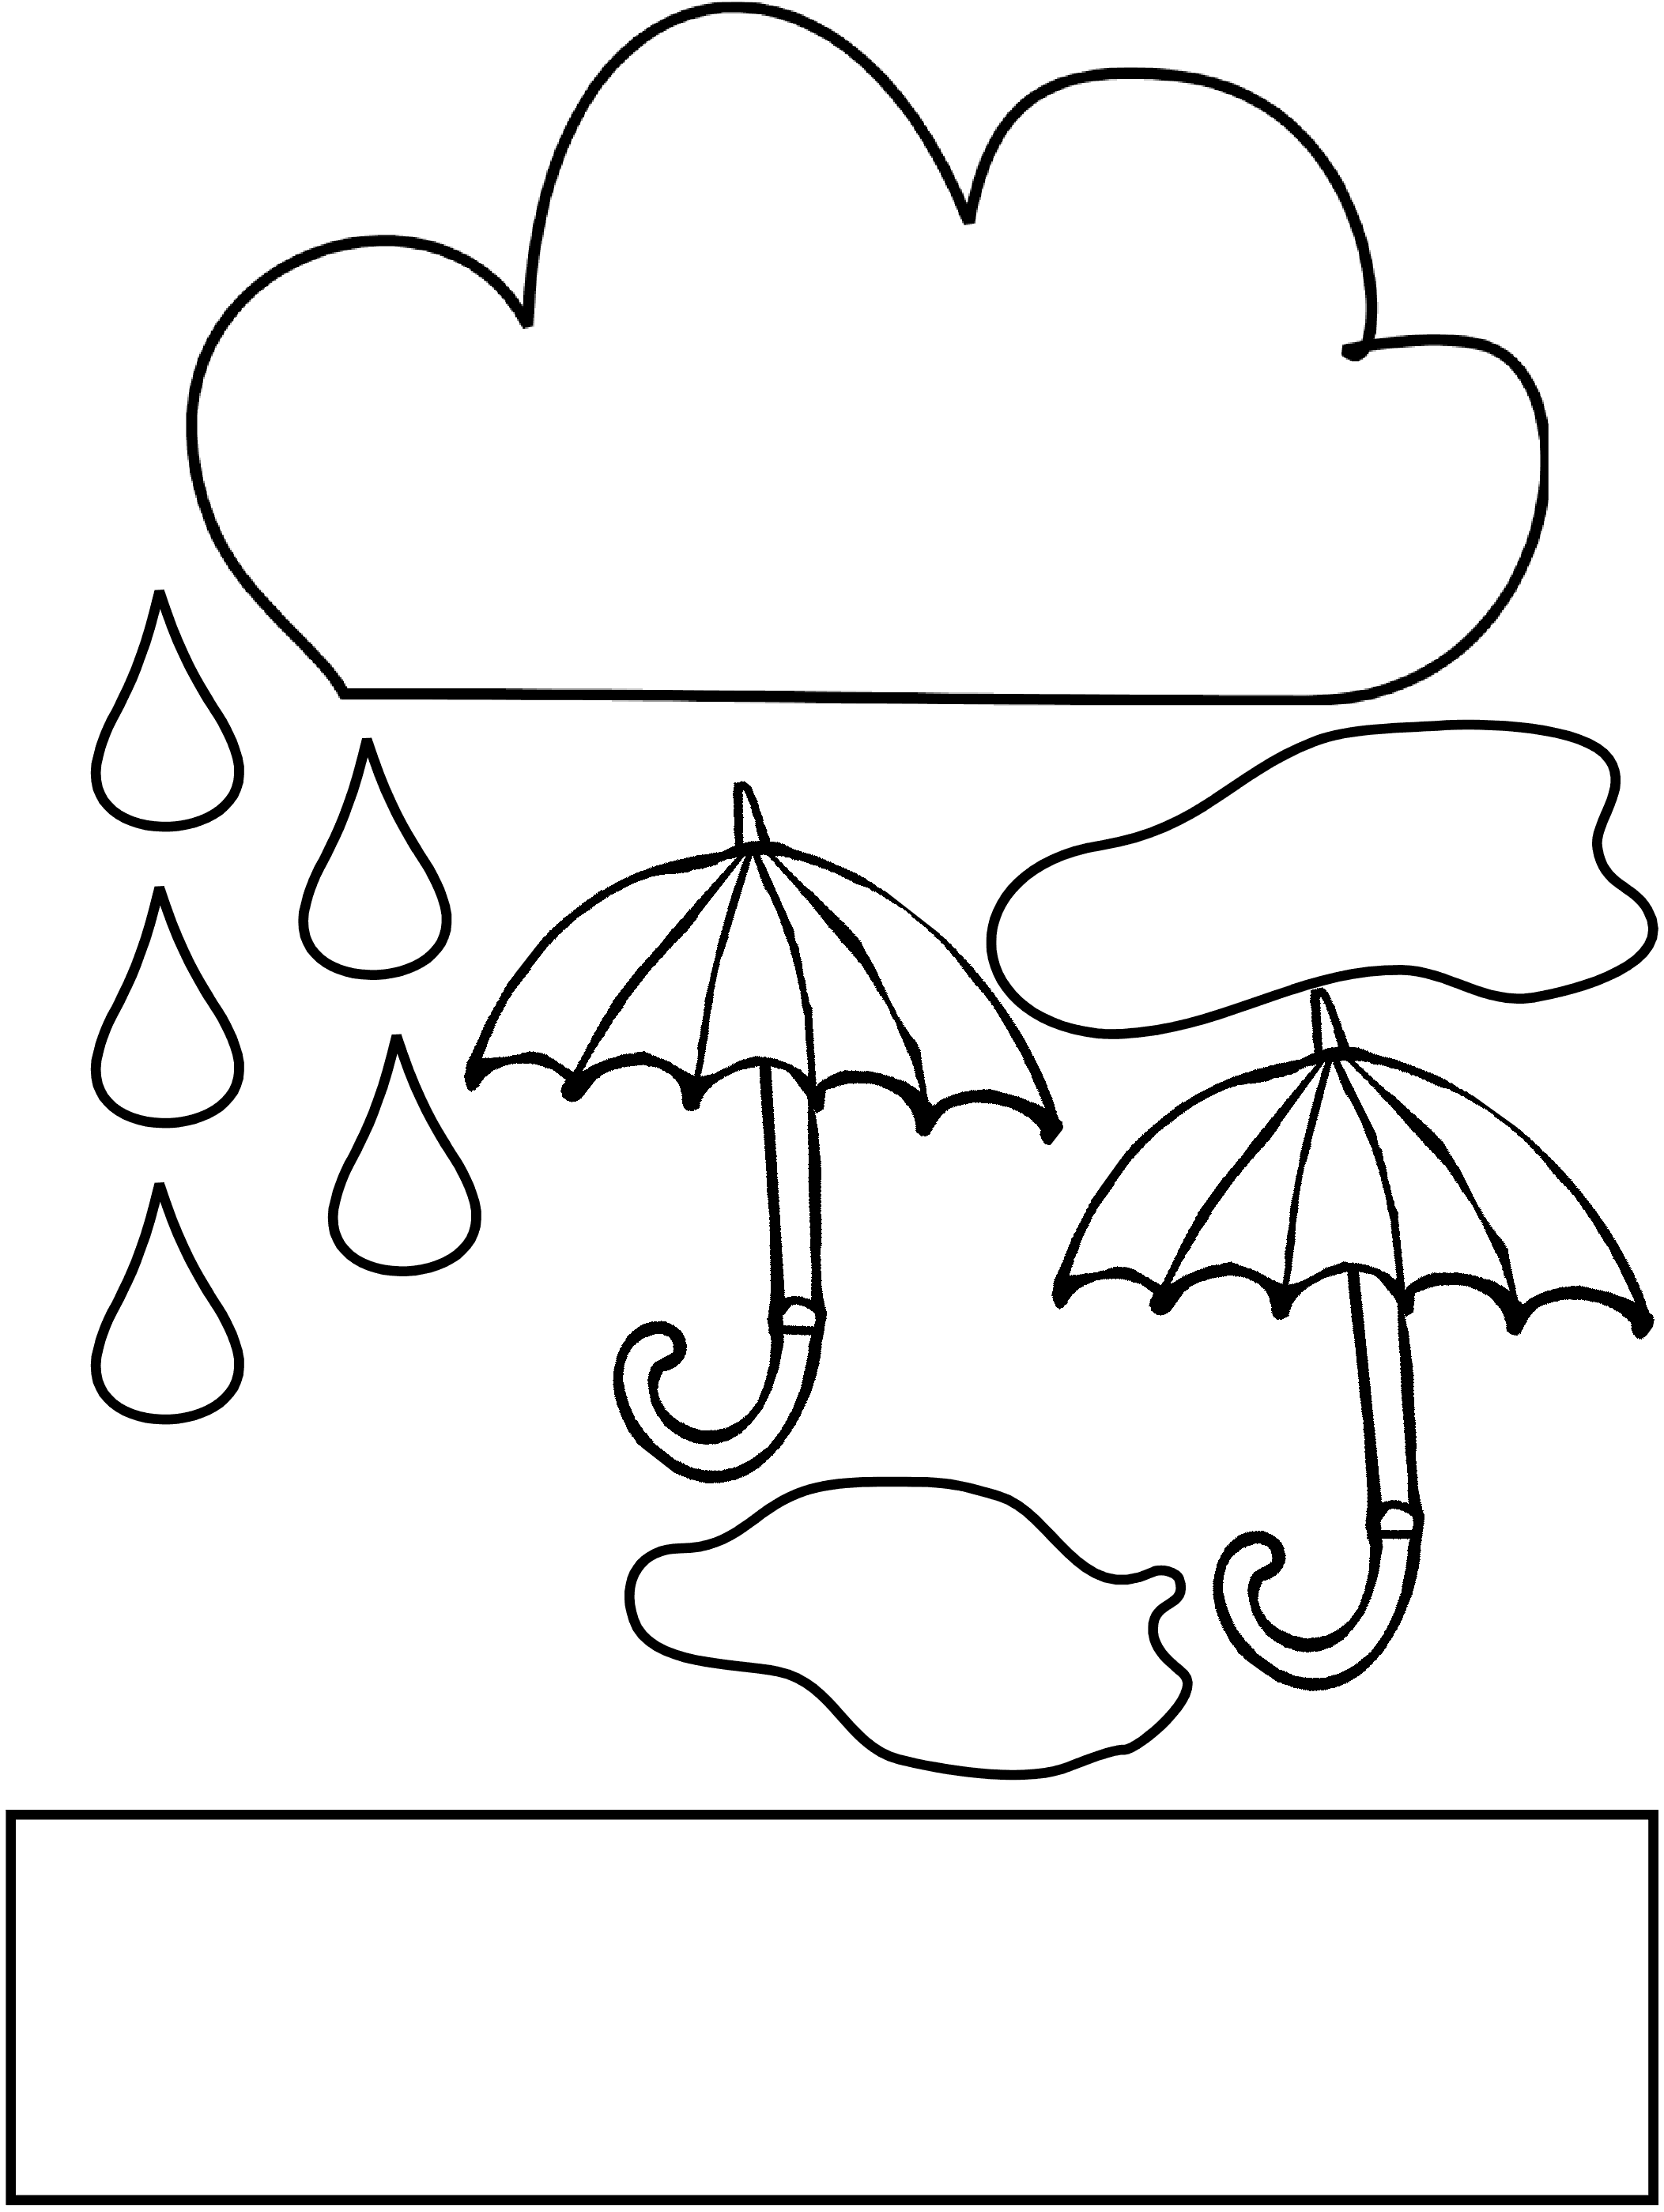 rain coloring page rain coloring page coloring home page rain coloring 